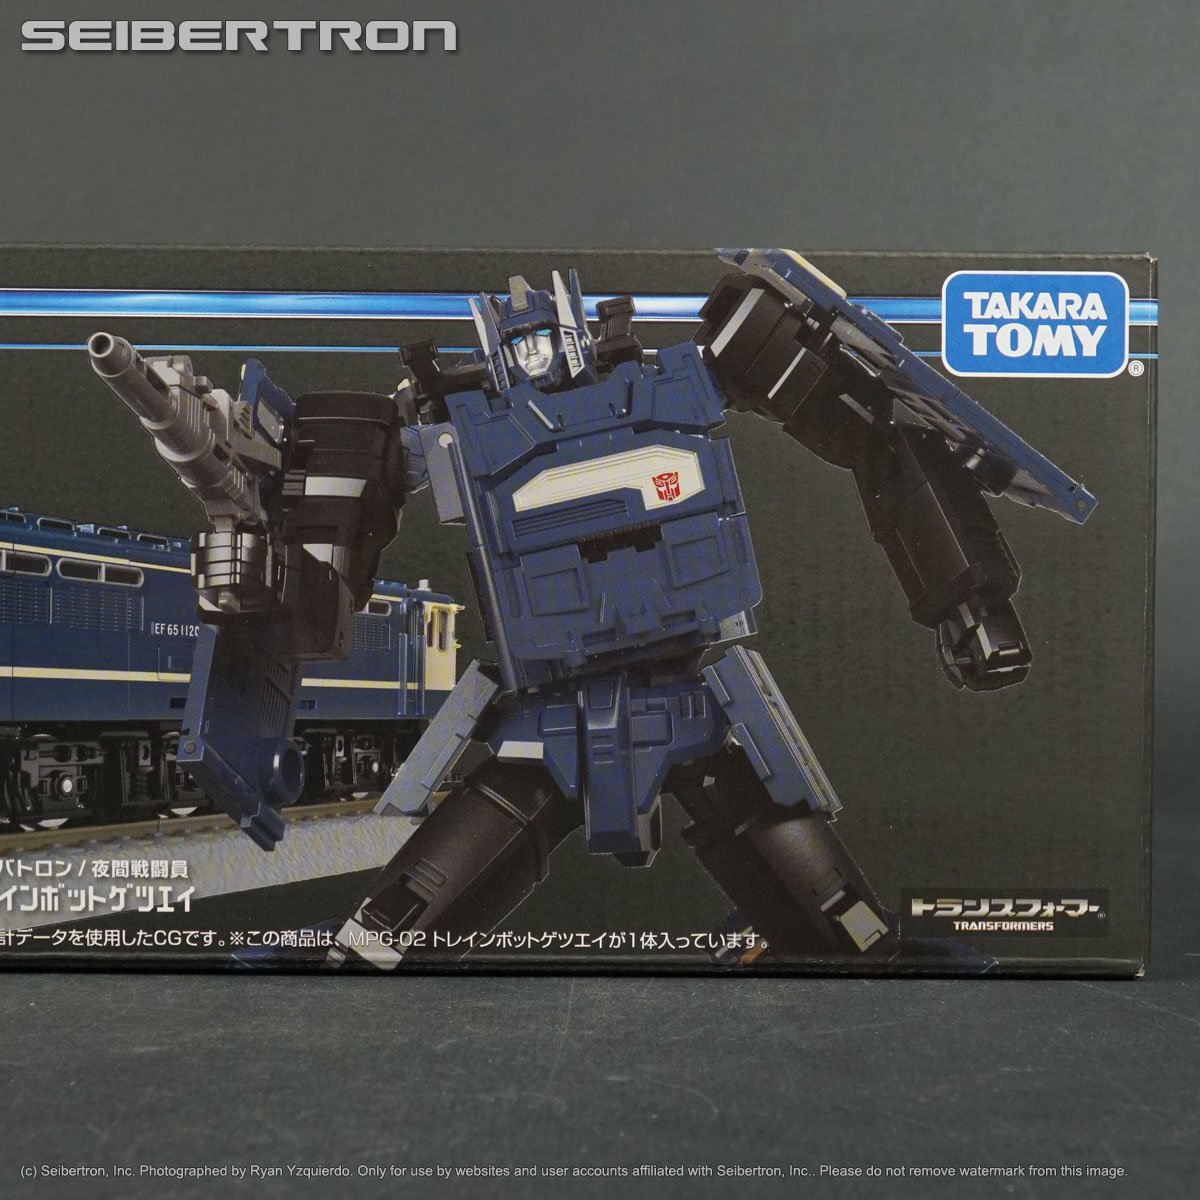 MPG-02 GETSUEI Transformers Masterpiece G1 Trainbots Raiden Hasbro 2023 New